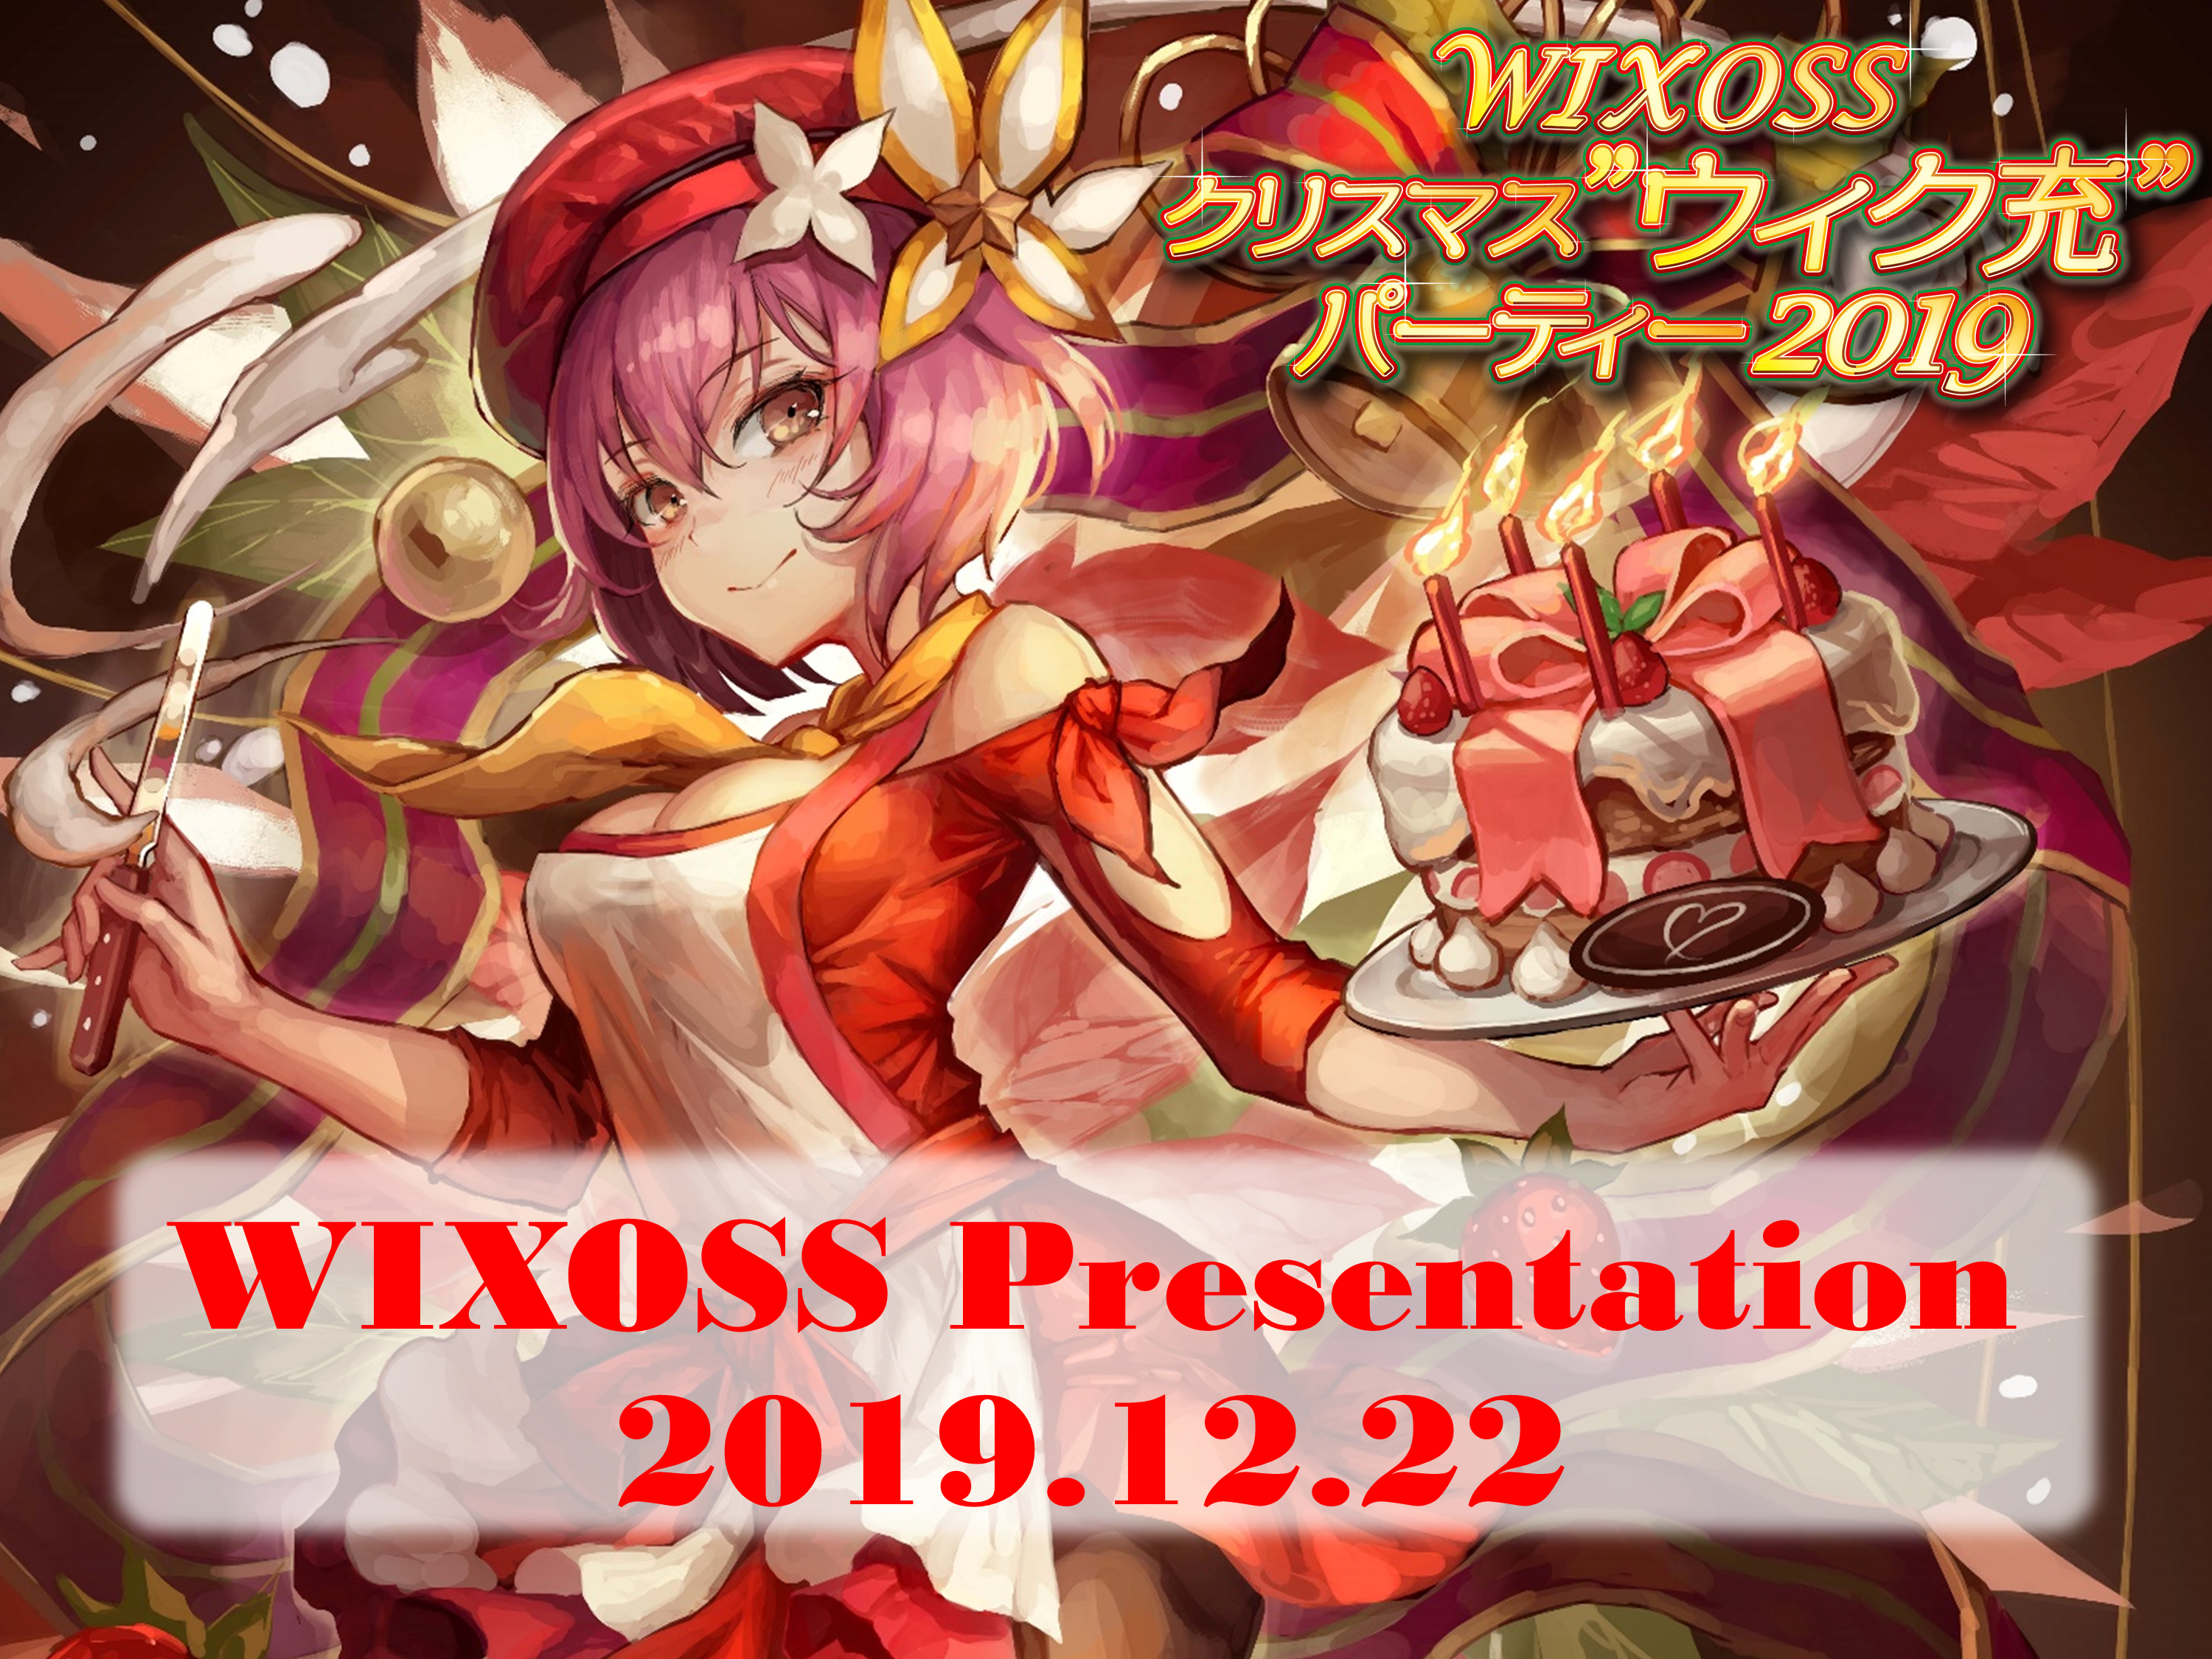 12.22「WIXOSS Presentation」発表内容まとめ